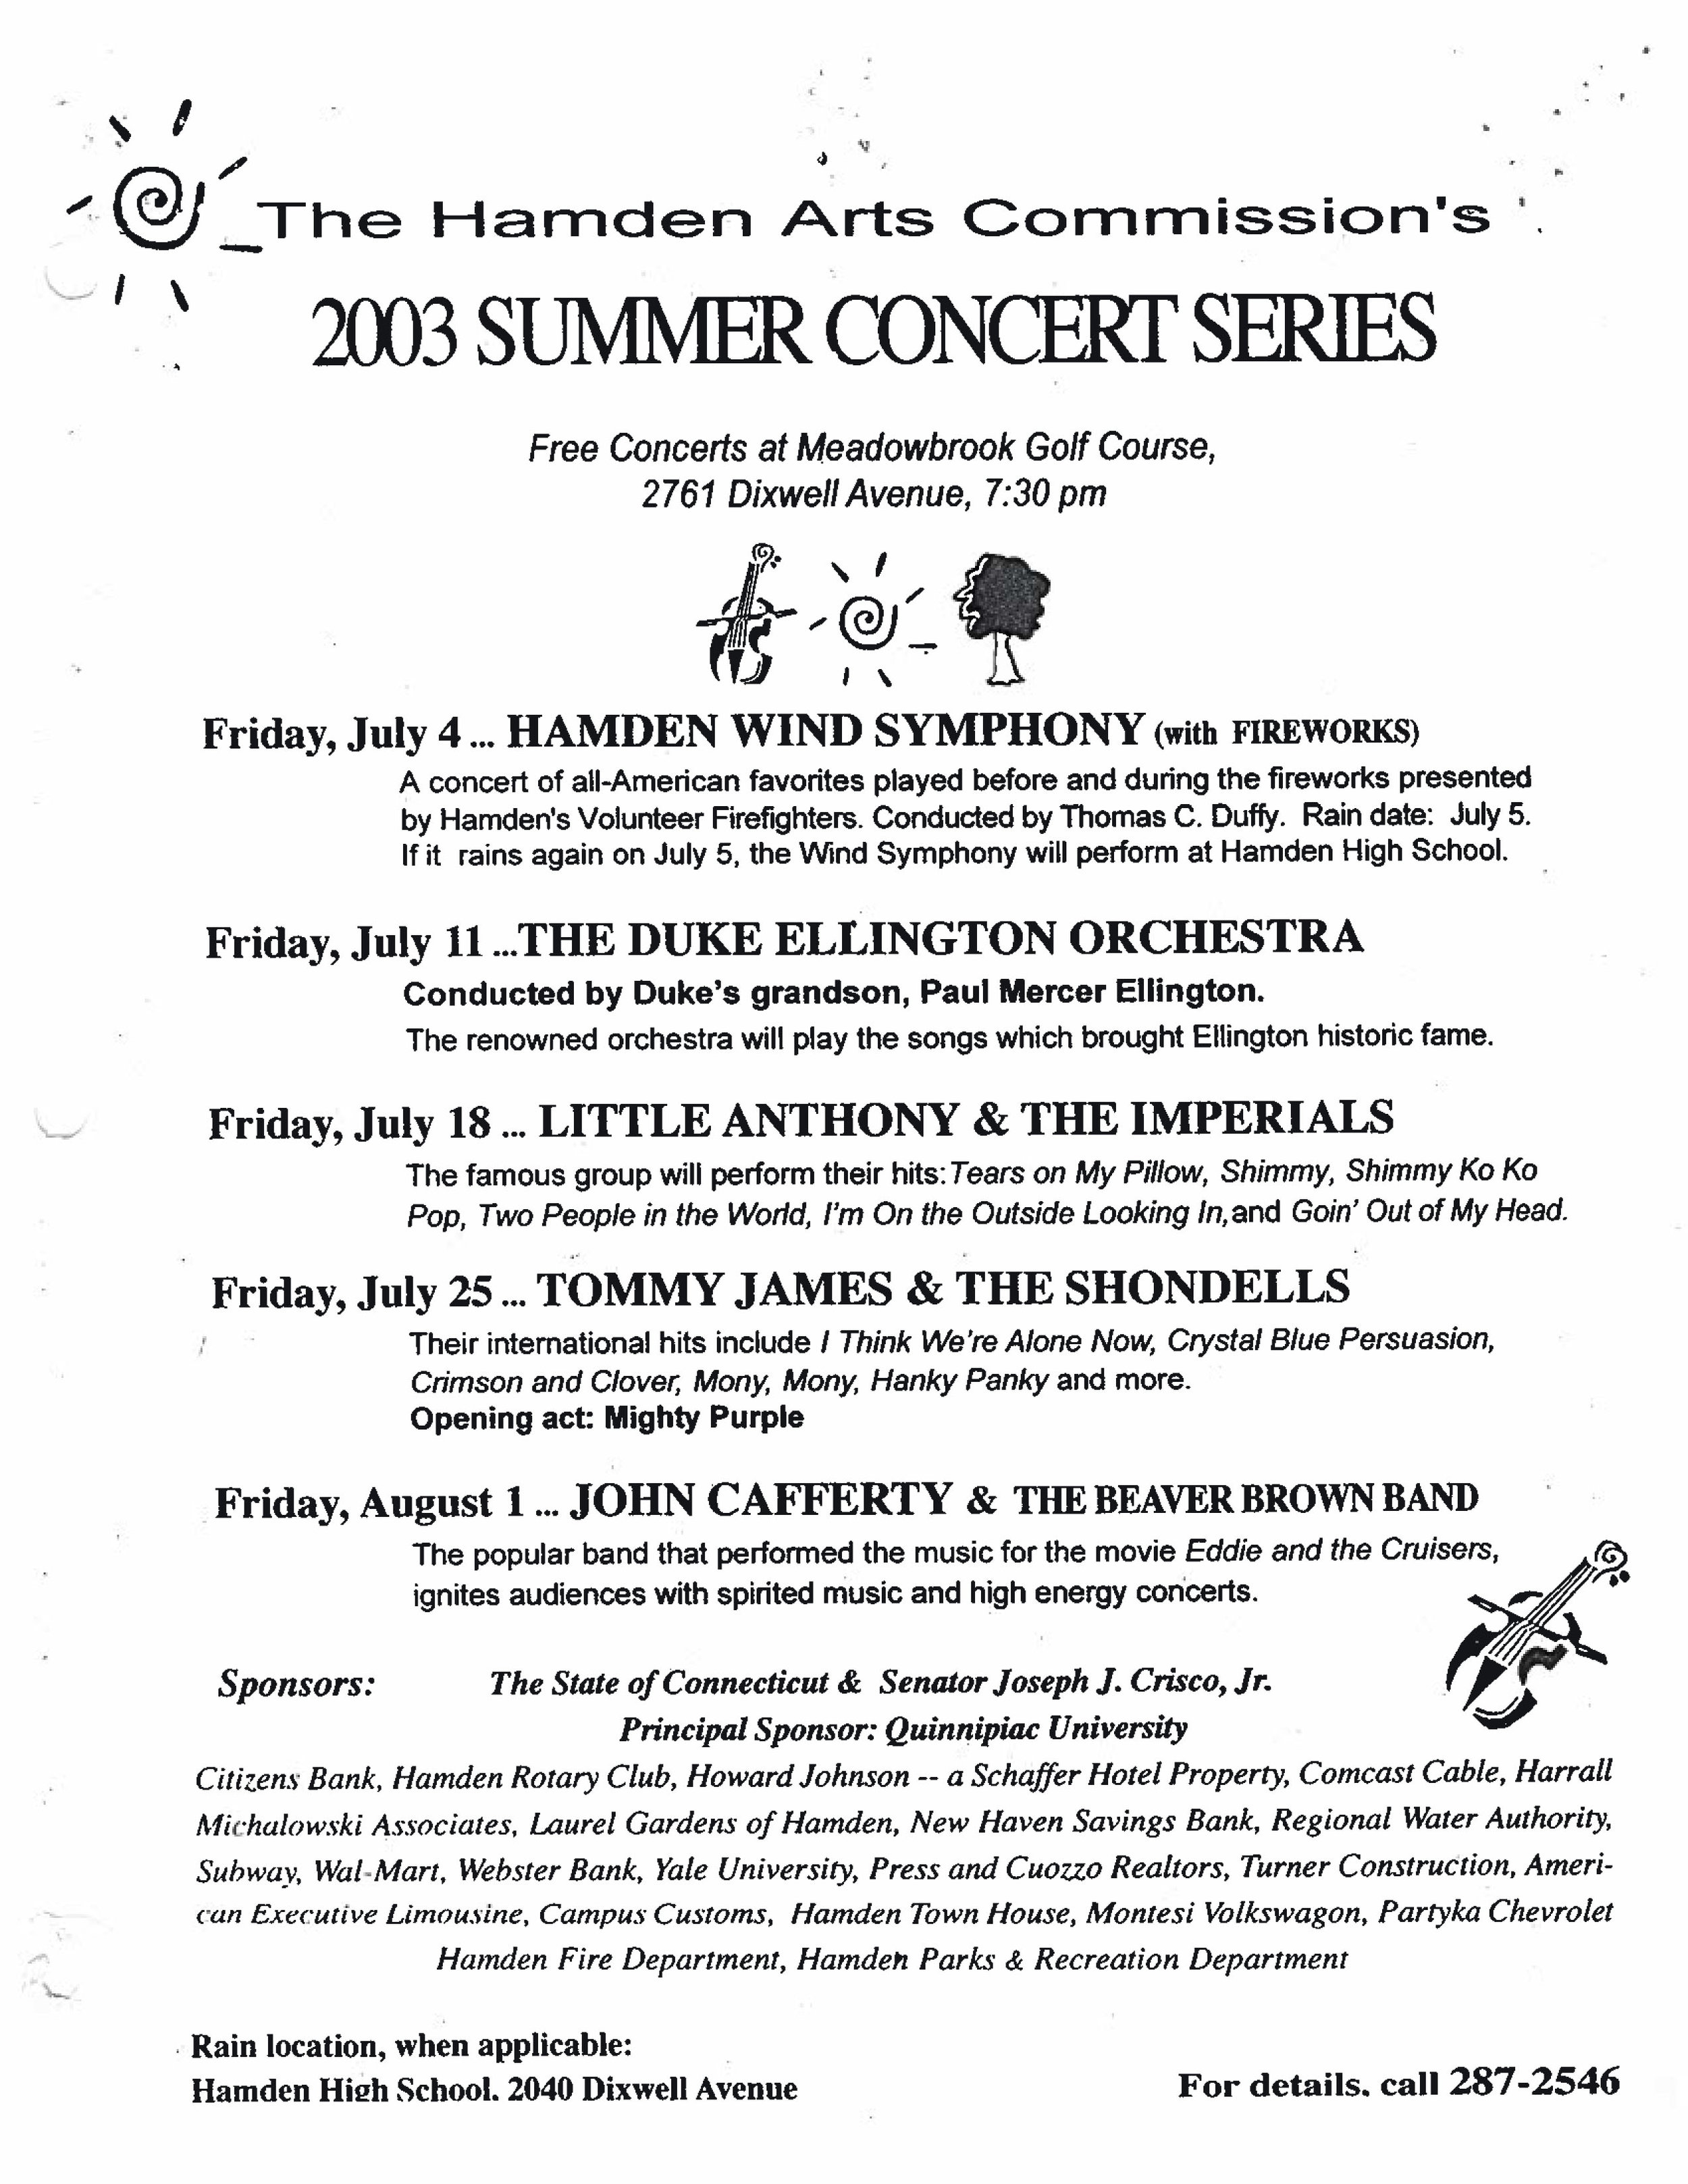 2003_Concerts Program.jpg